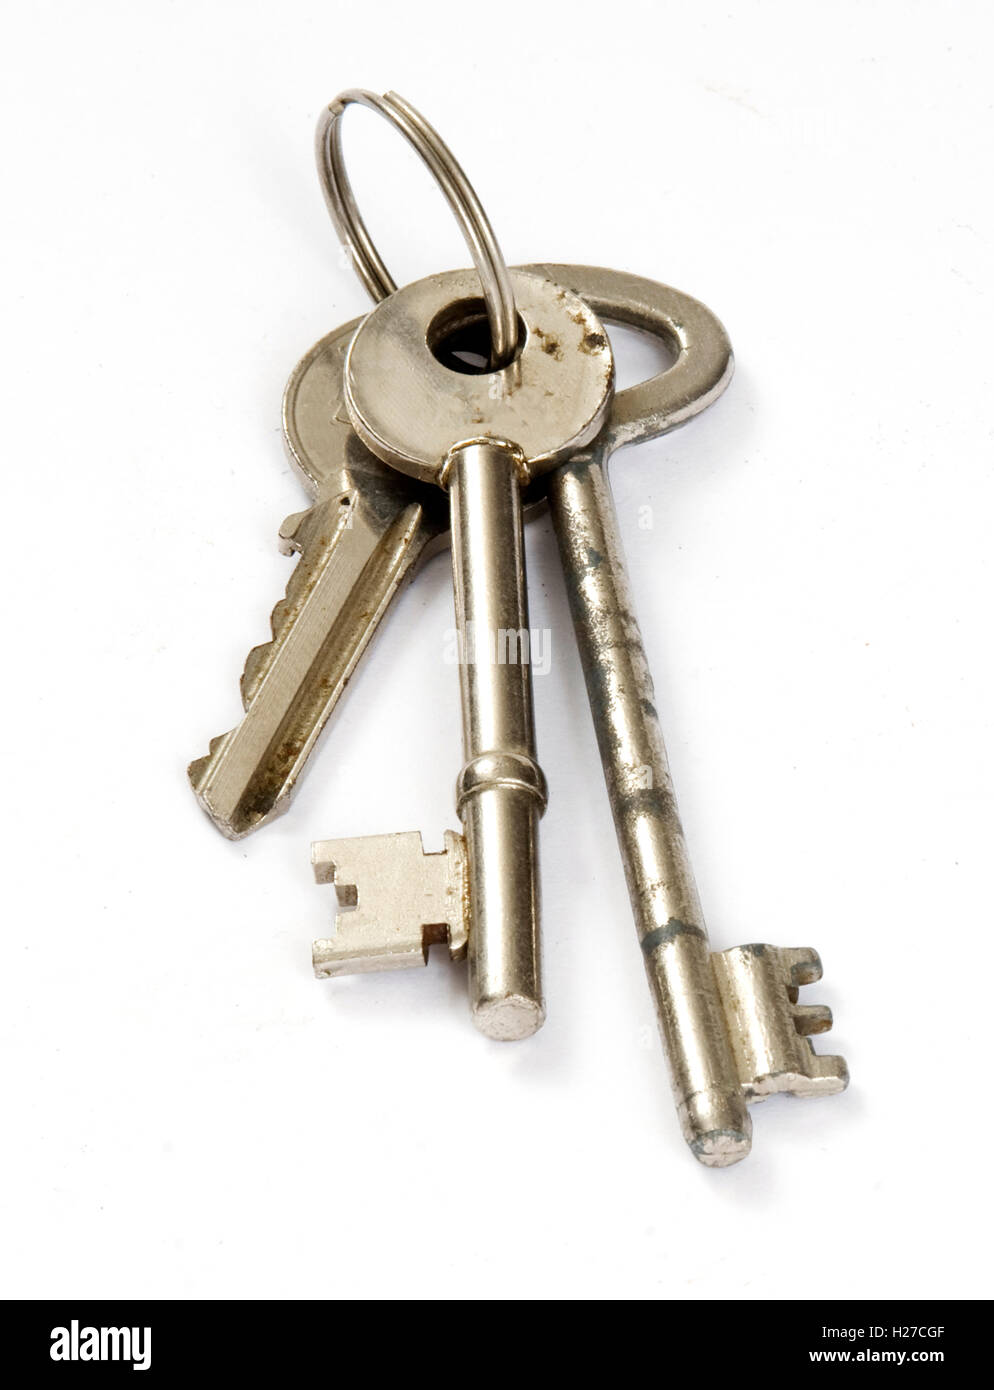 Three rusty old keys on a ring. studio shot on white background. Stock Photo